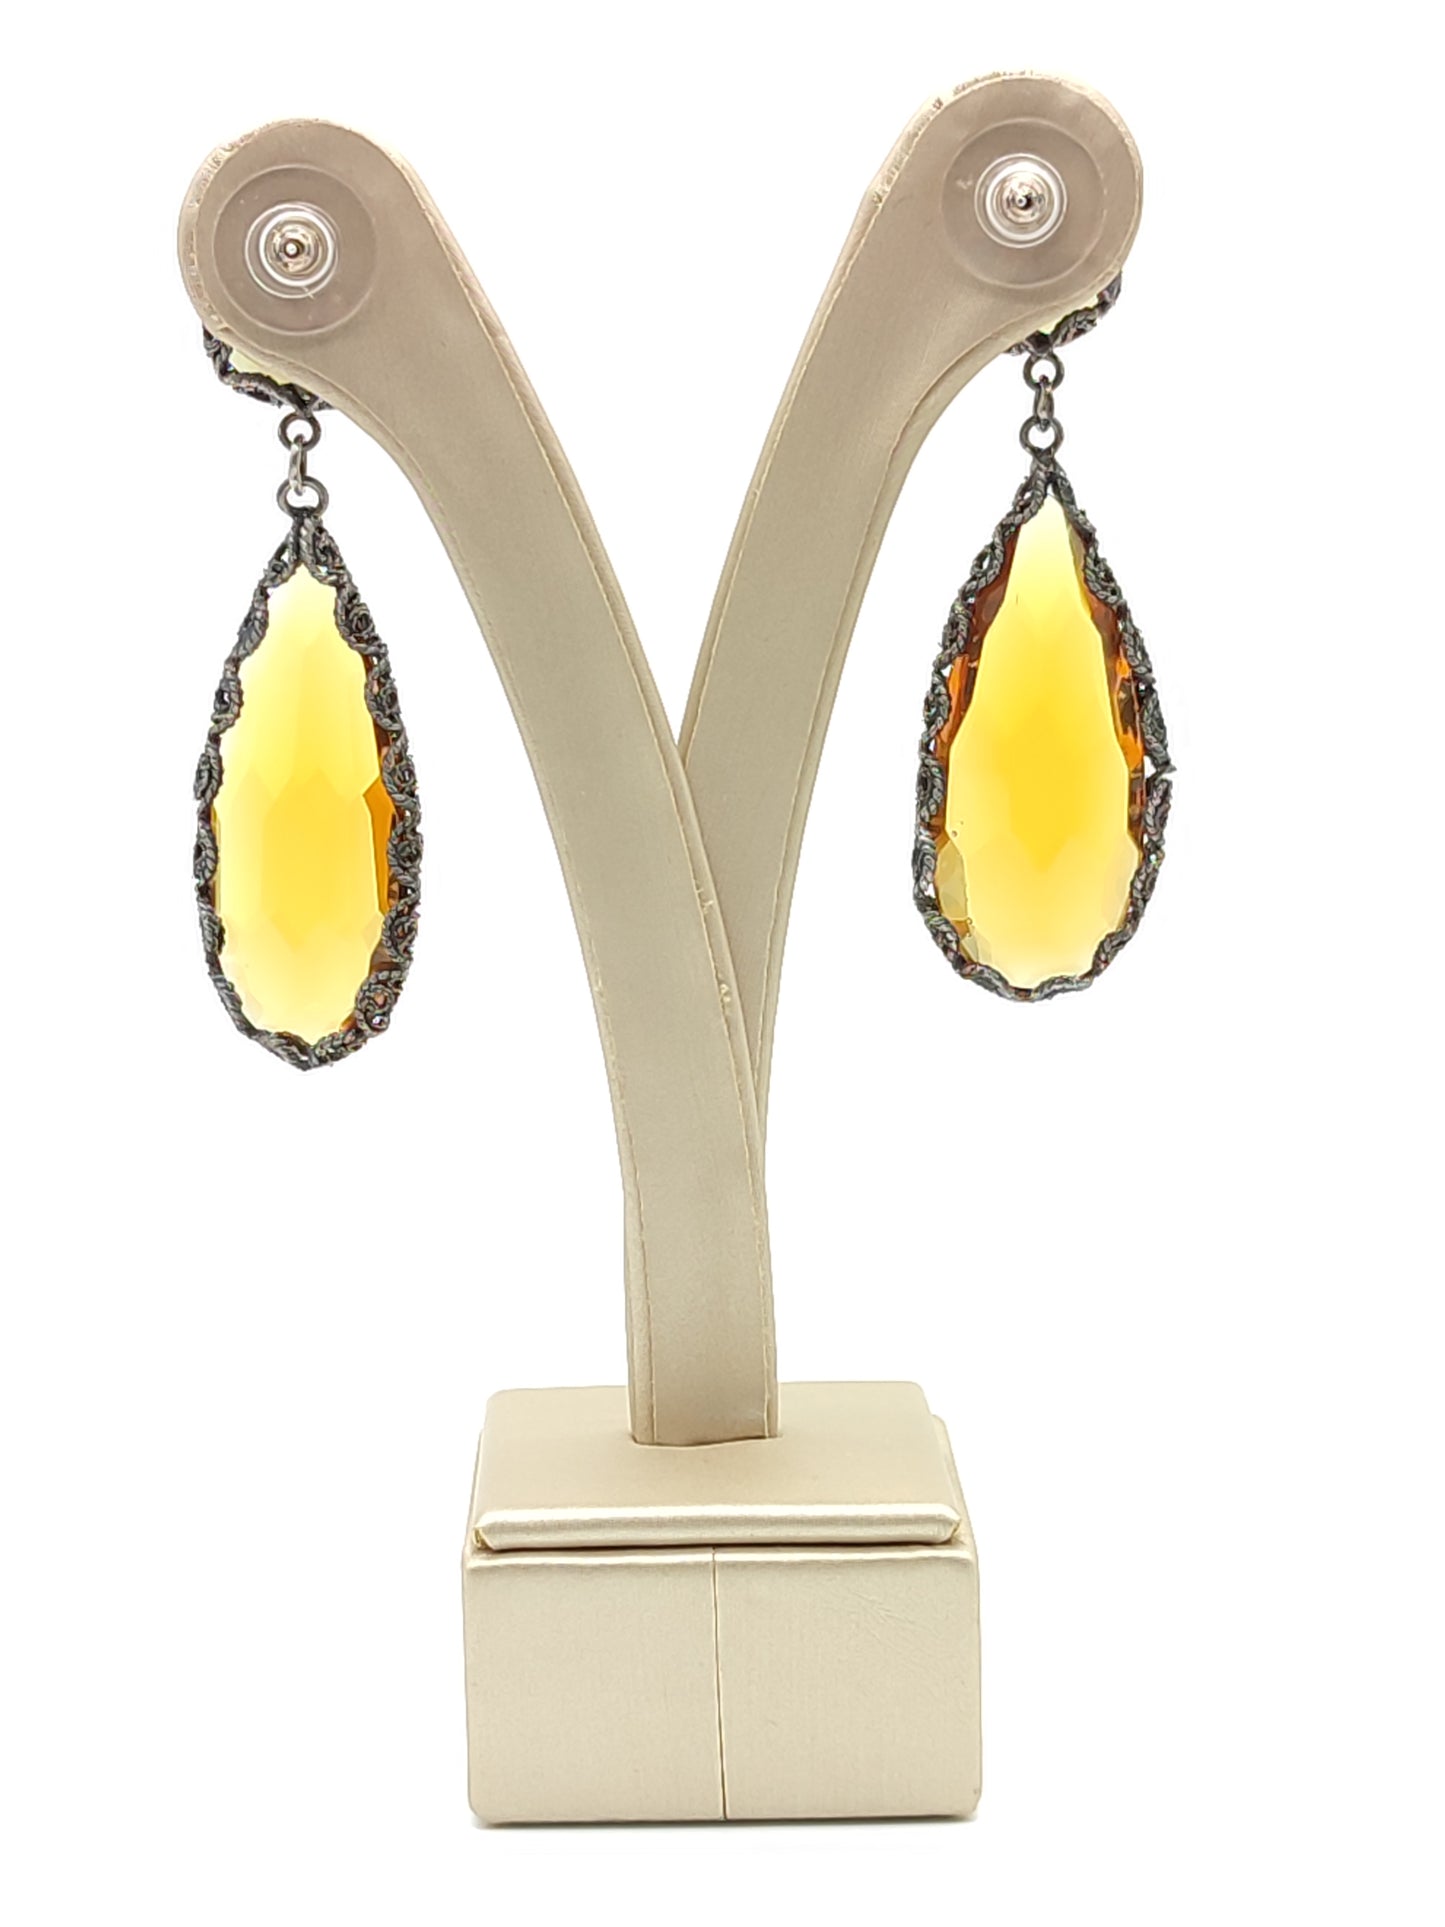 Silver filigree earrings with citrine quartz